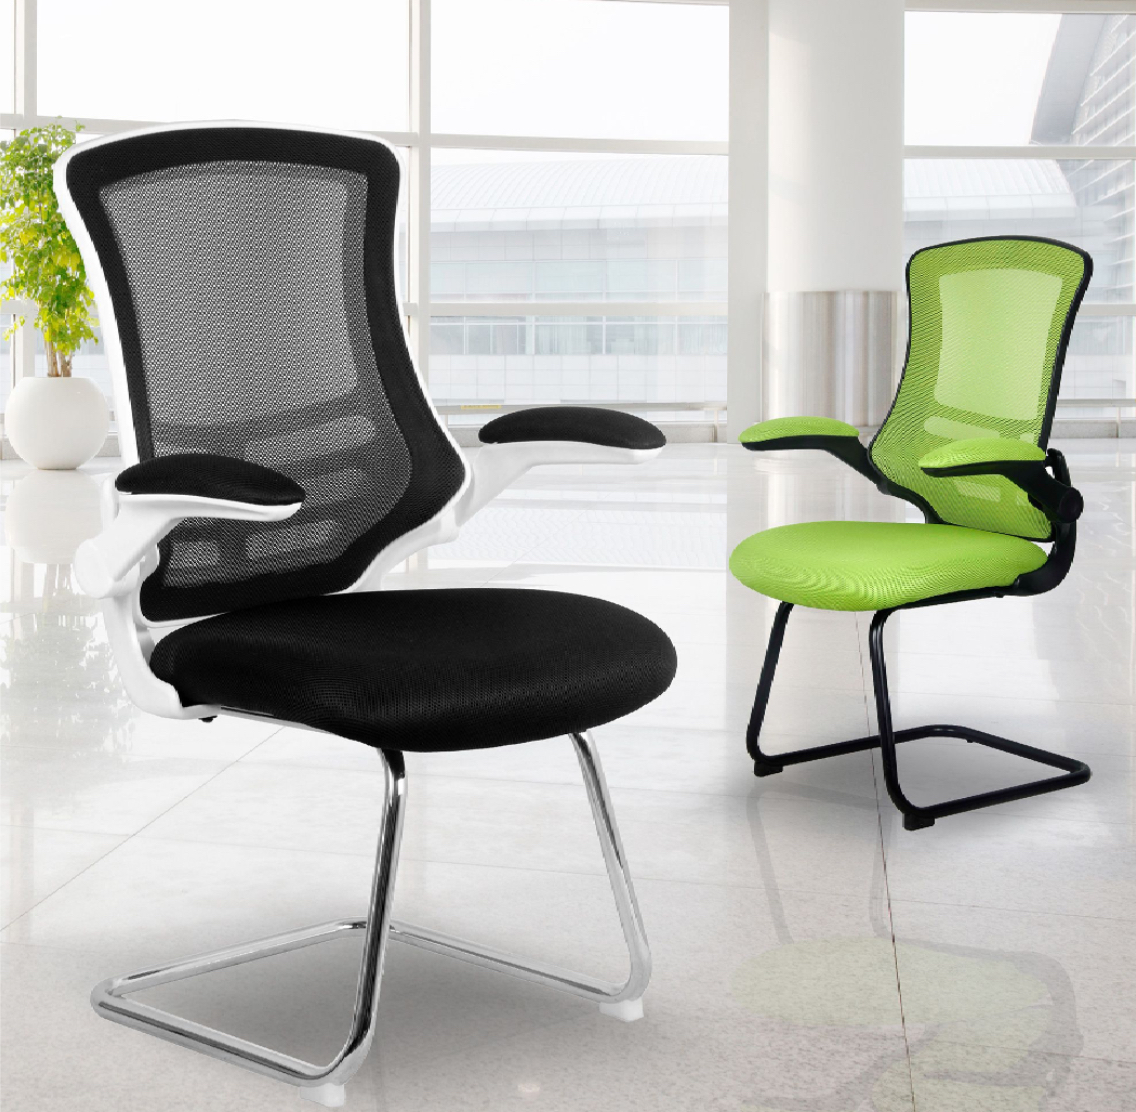 Designer mesh chrome cantilever chair Black and White